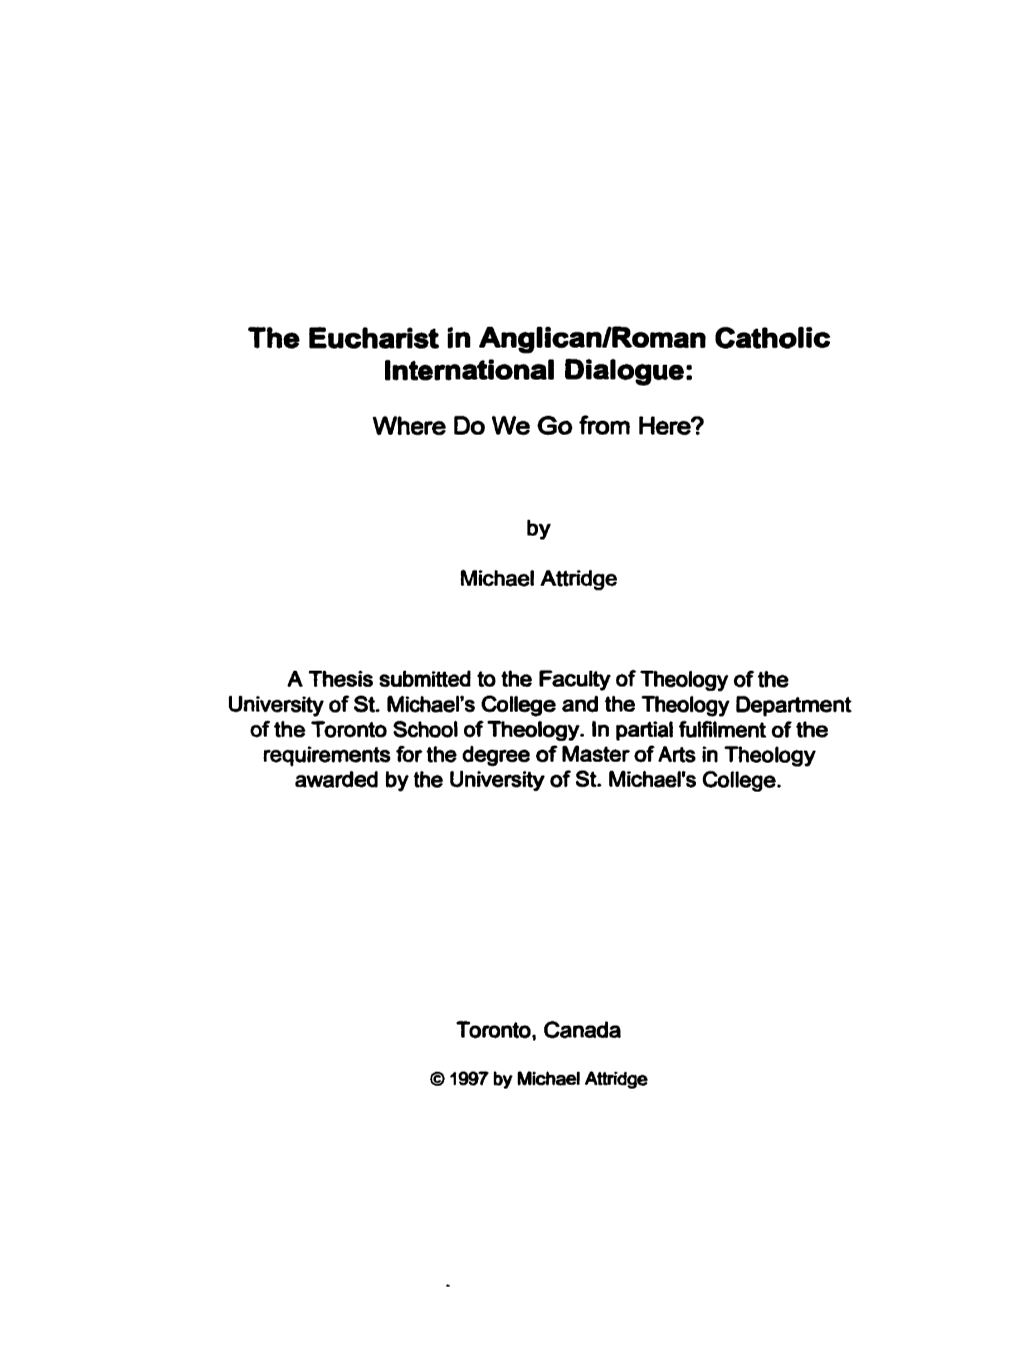 The Eucharist in Anglicaniroman Catholic International Dialogue